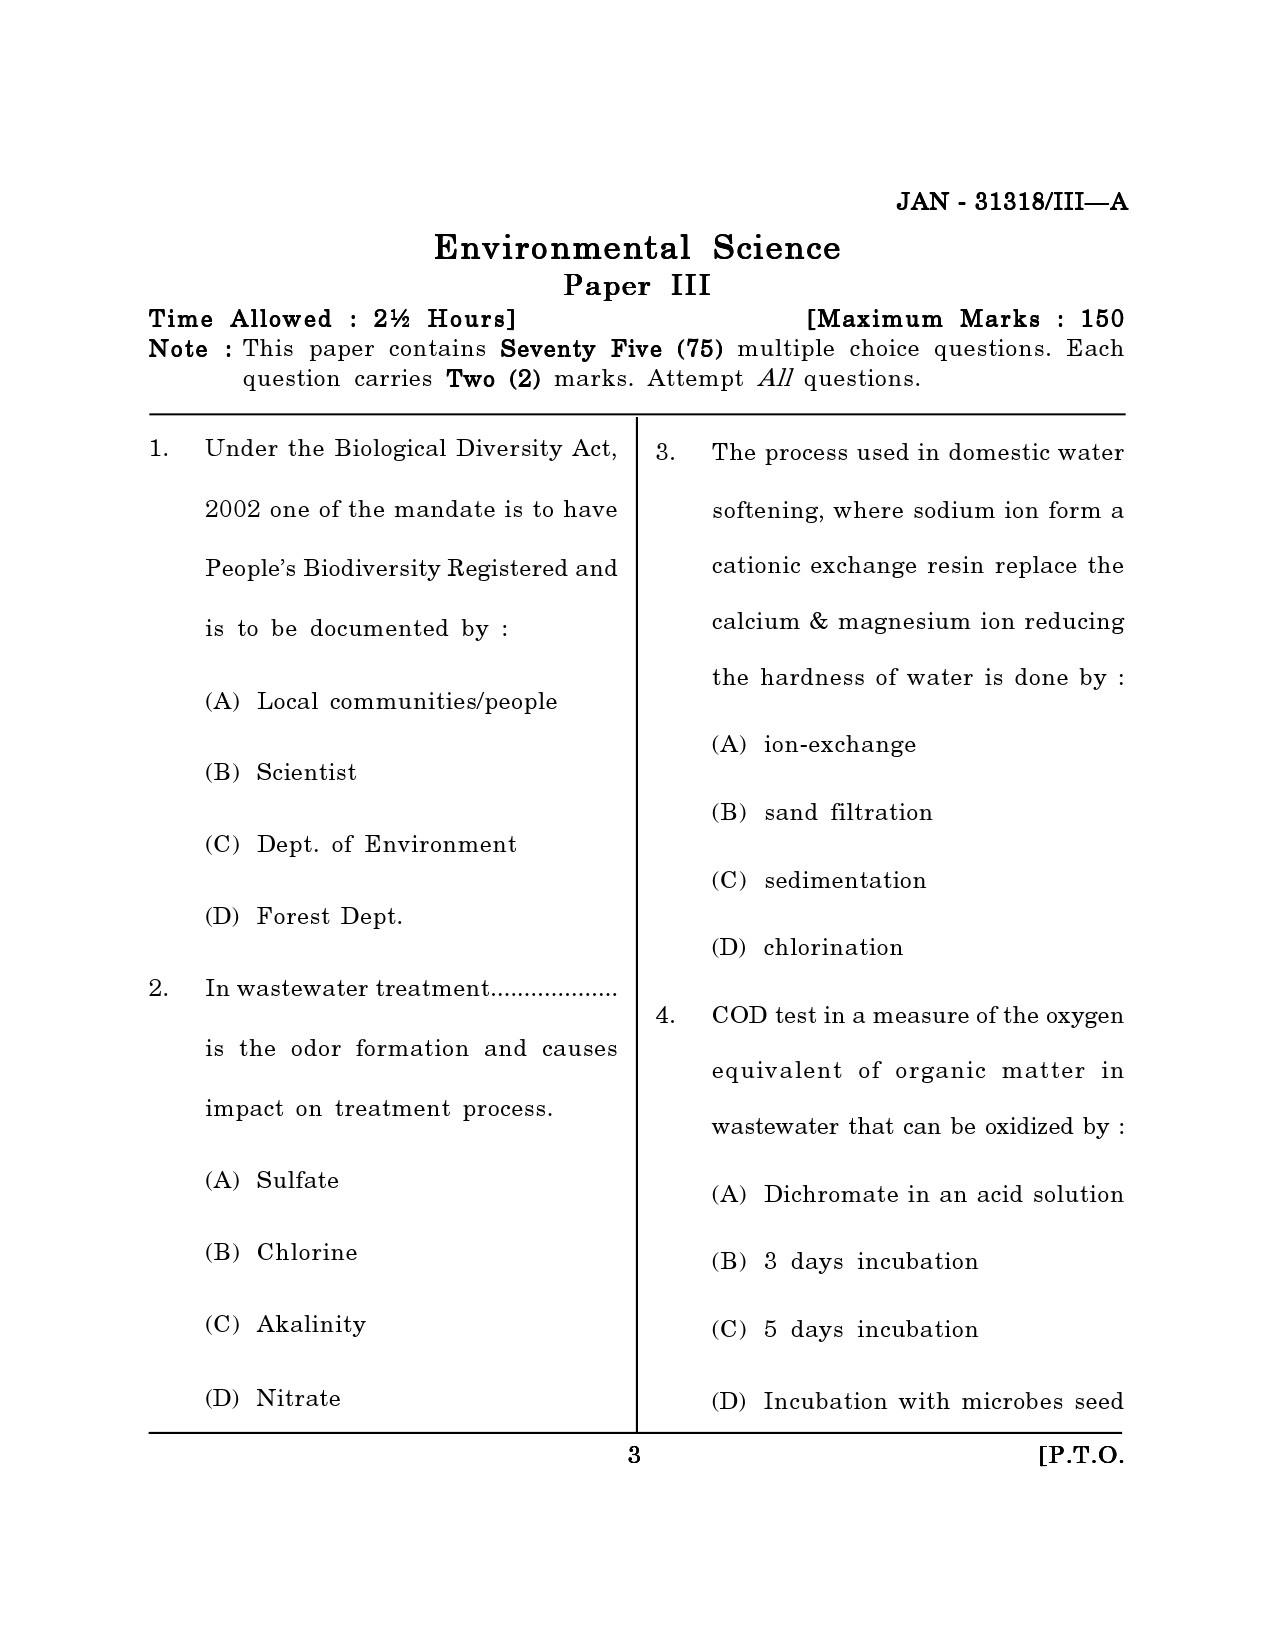 Maharashtra SET Environmental Sciences Question Paper III January 2018 2